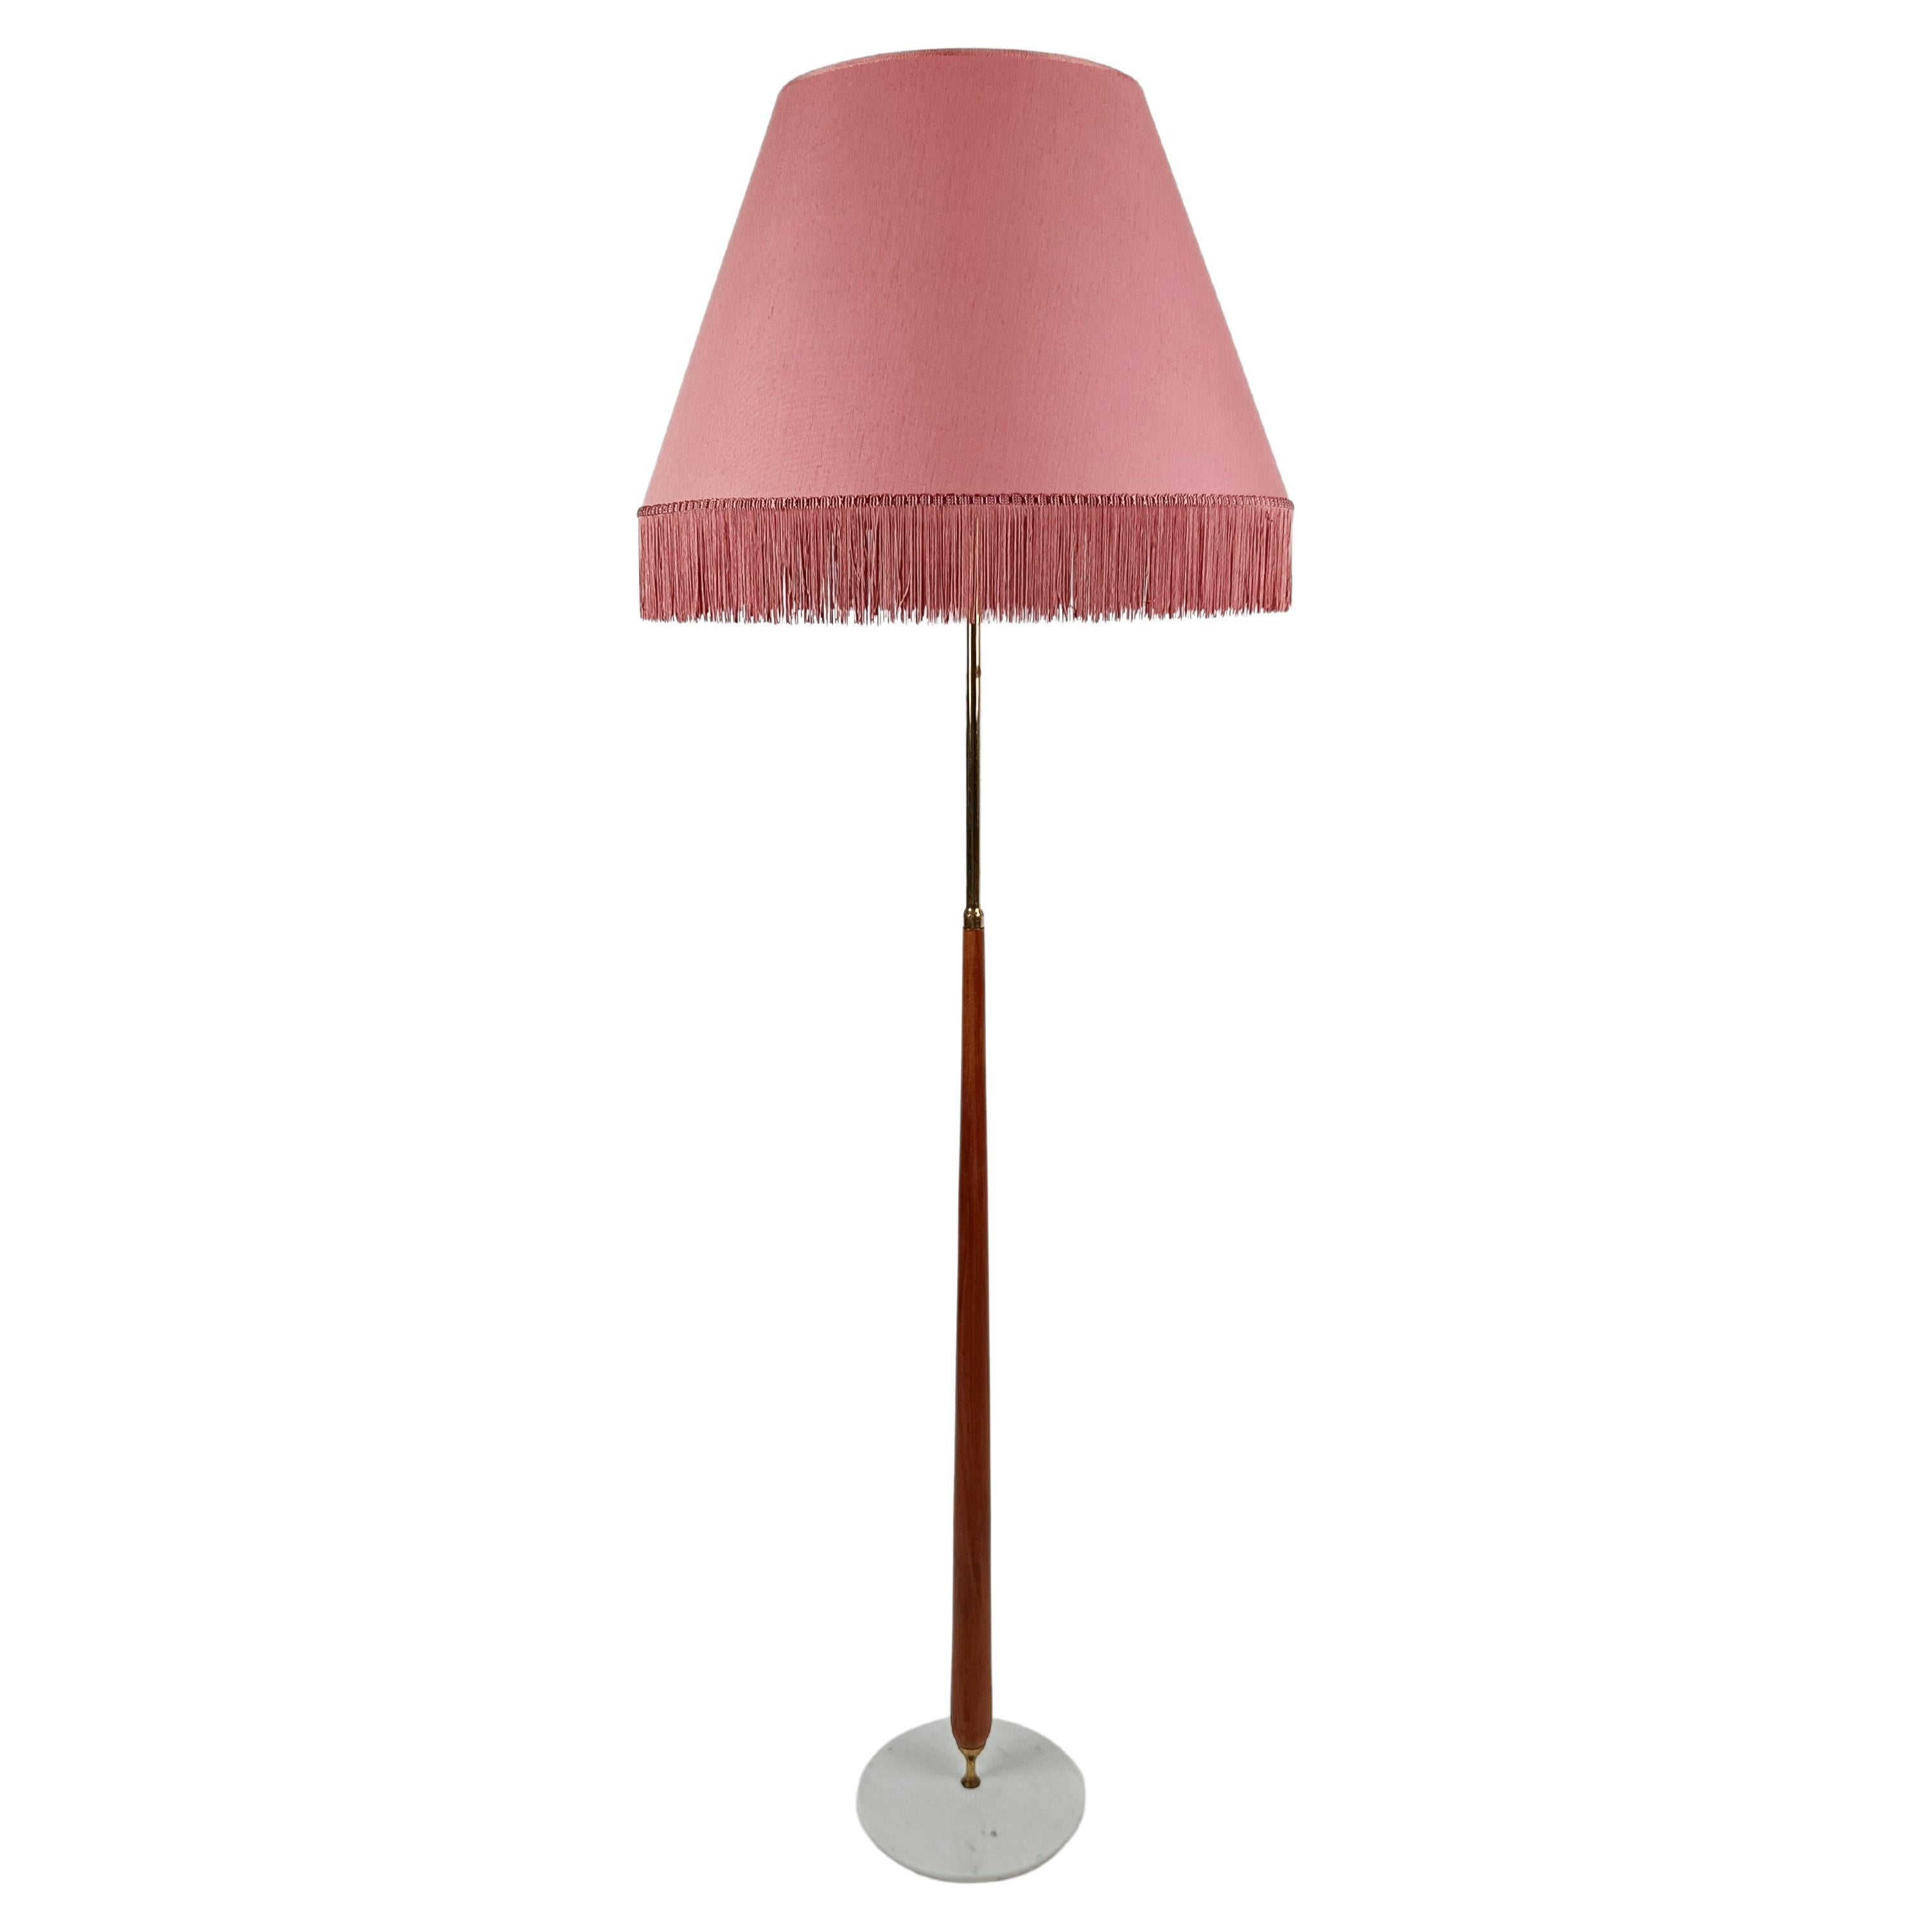 Italian Mid Century Floor Lamp in Solid Wood, Carrara Marble and Brass, 1950s